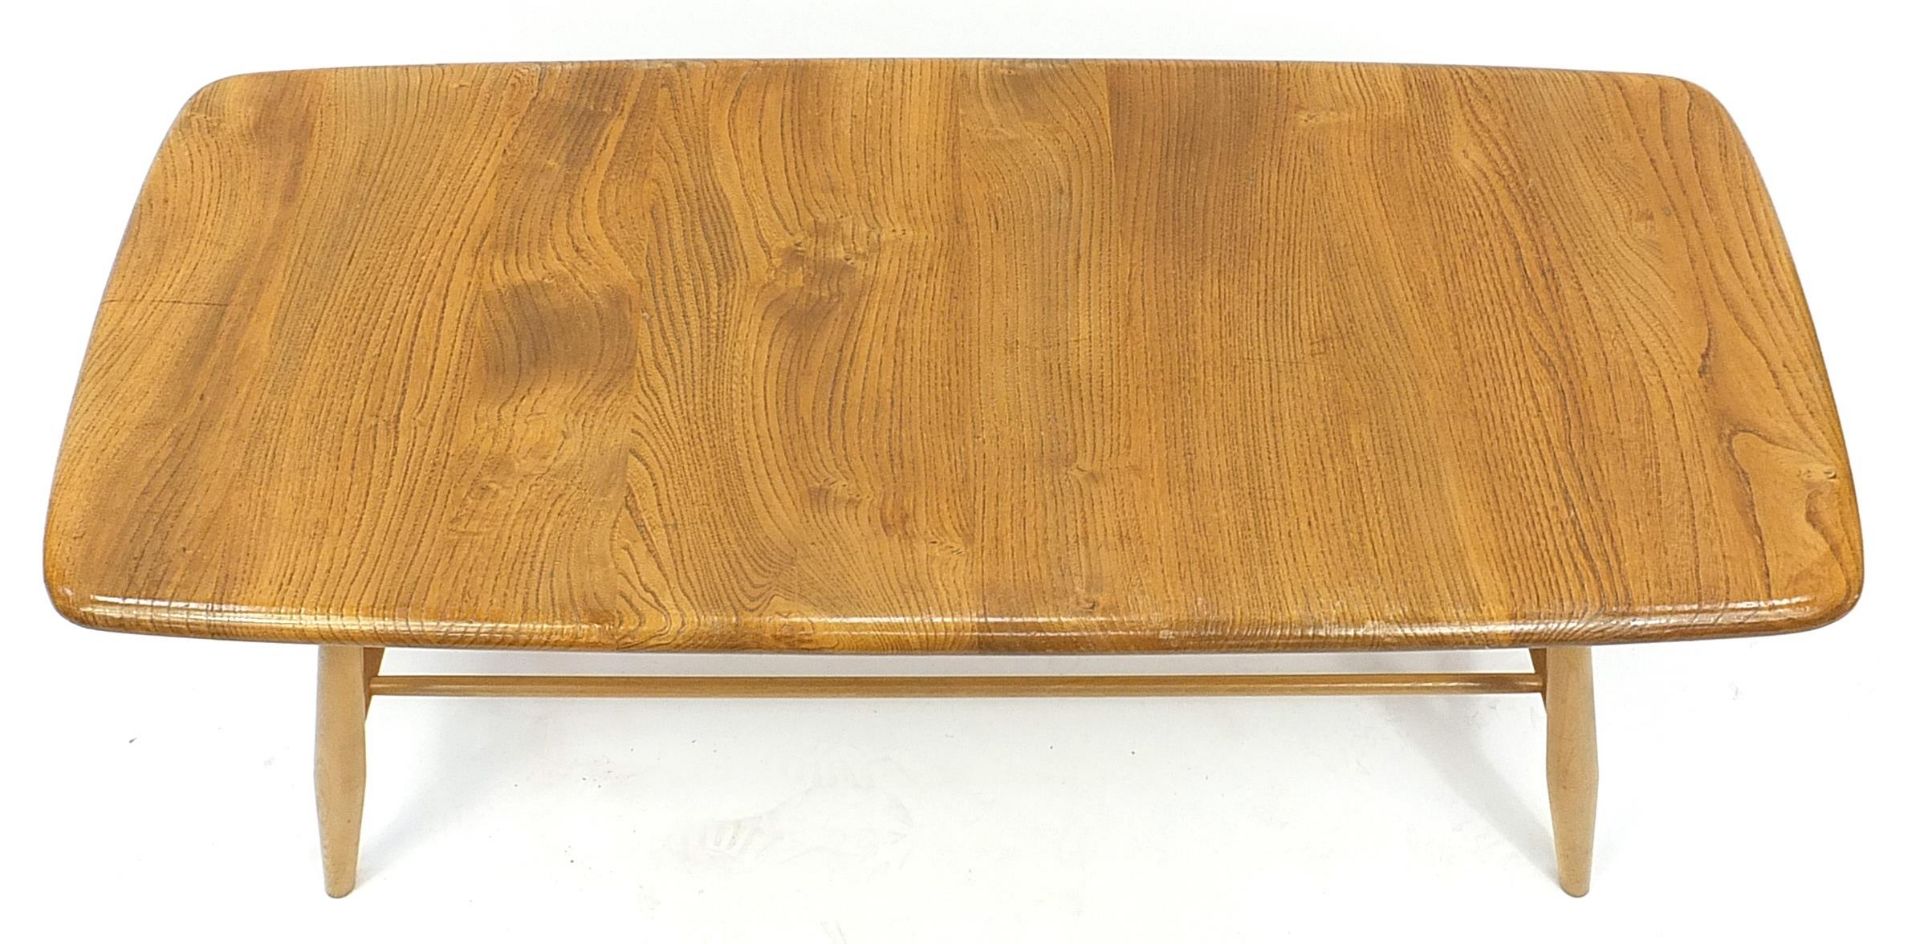 Vintage Ercol light elm coffee table with rack, 36cm H x 102cm W x 43cm D - Image 3 of 6